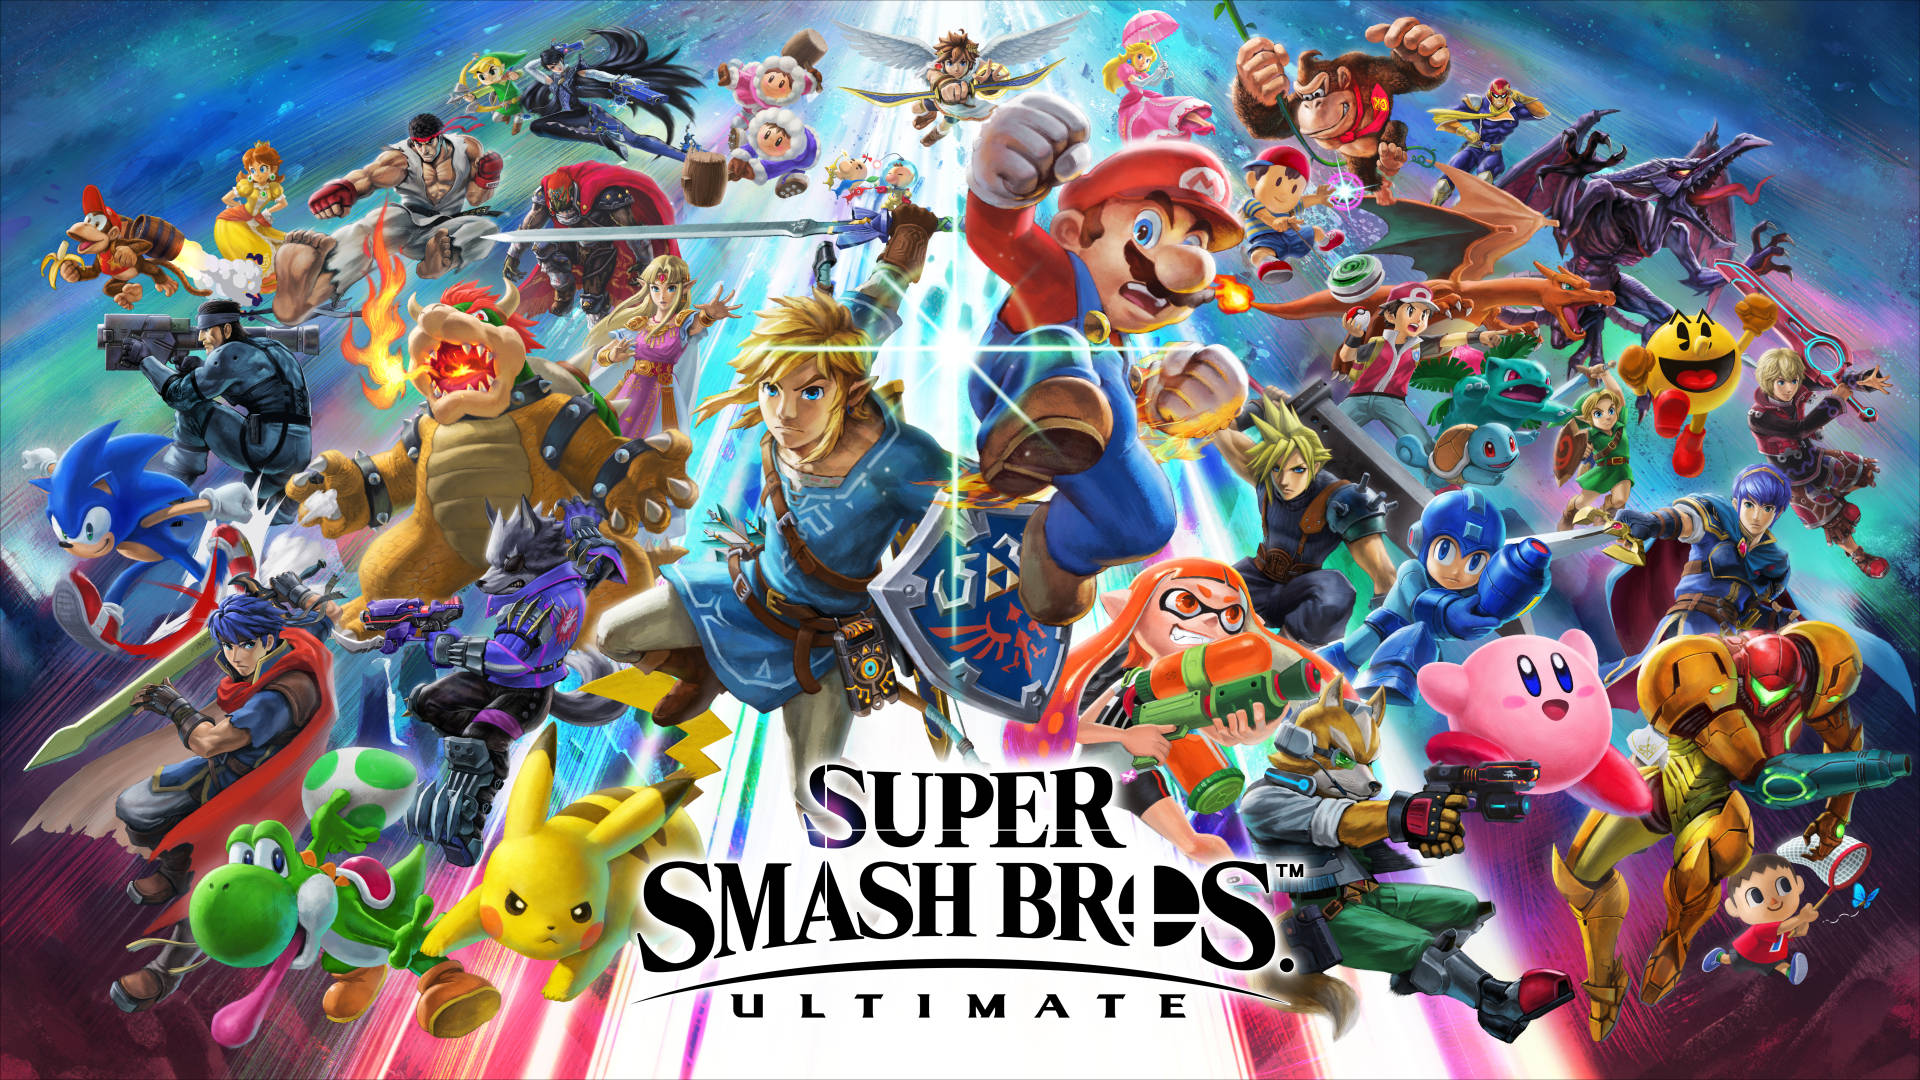 Top 999+ Super Smash Bros Ultimate Wallpaper Full HD, 4K✅Free to Use